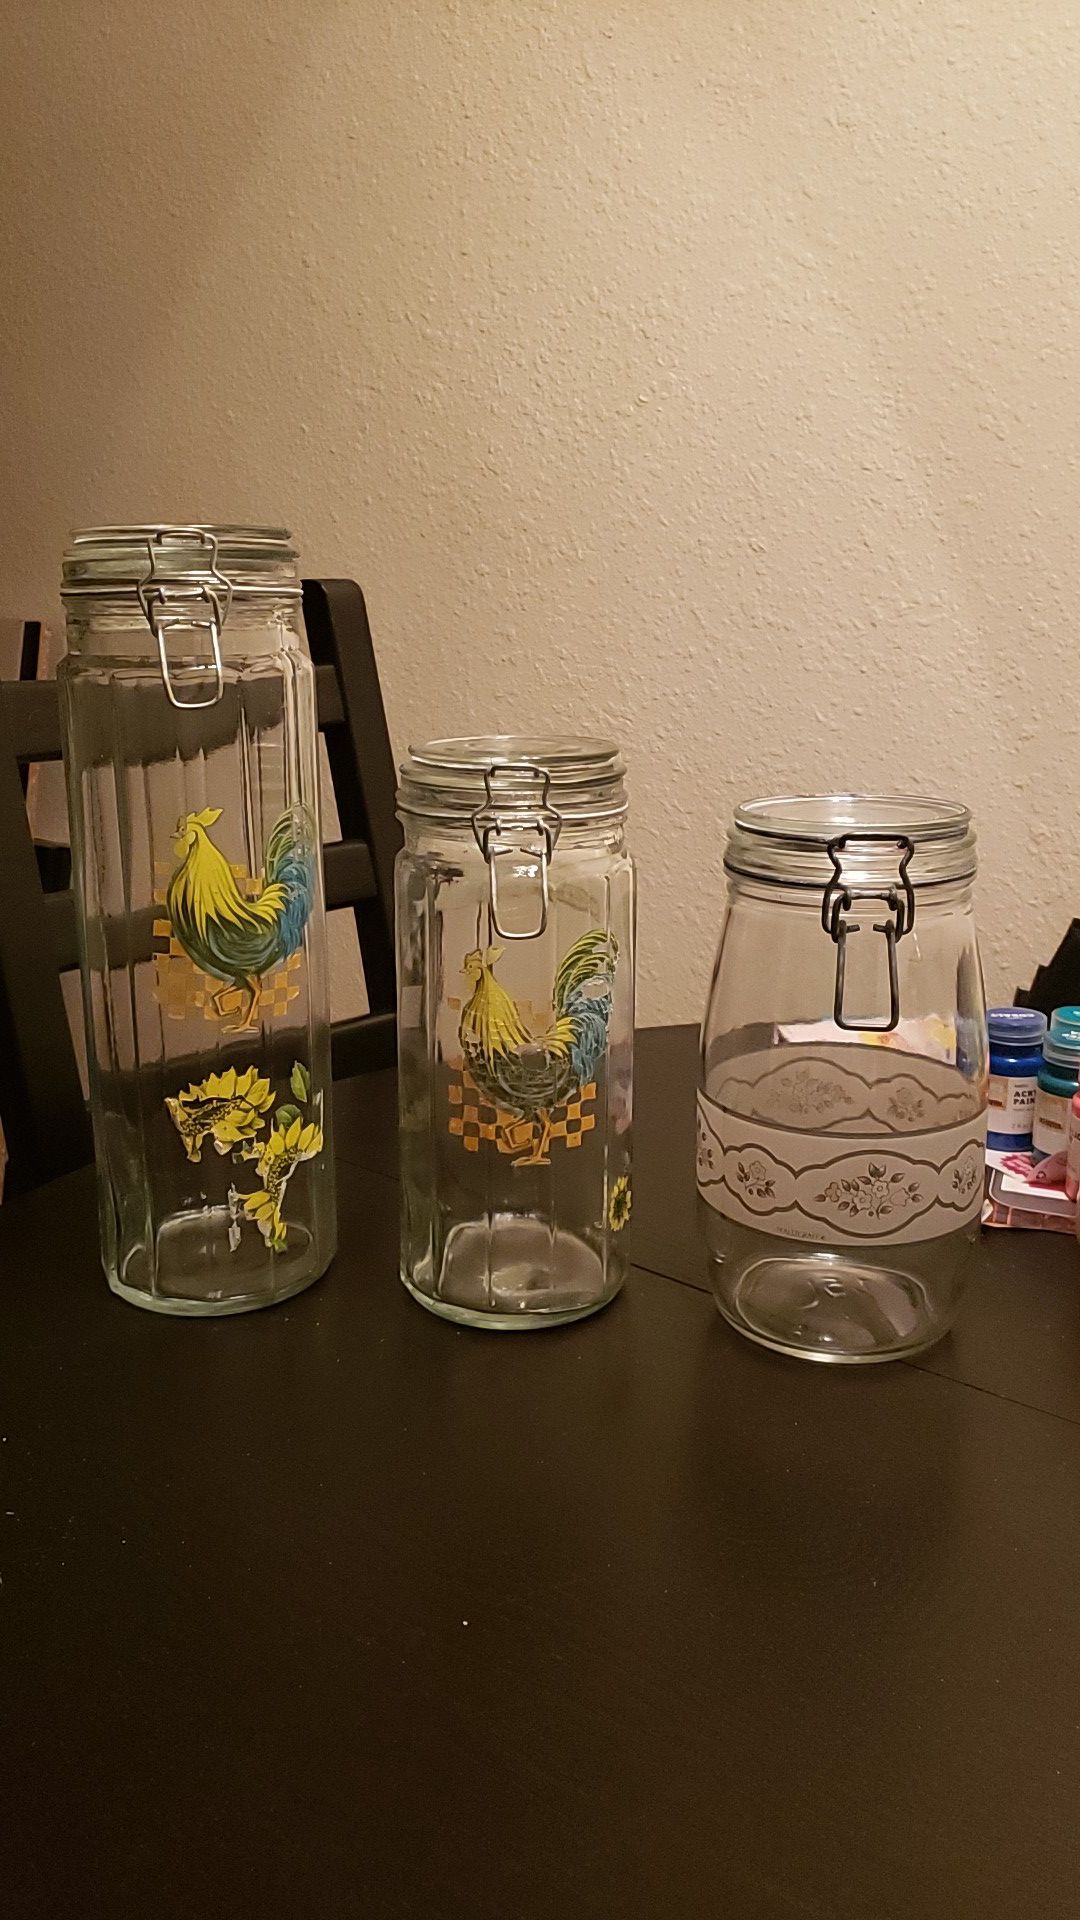 Glass jars with a latch